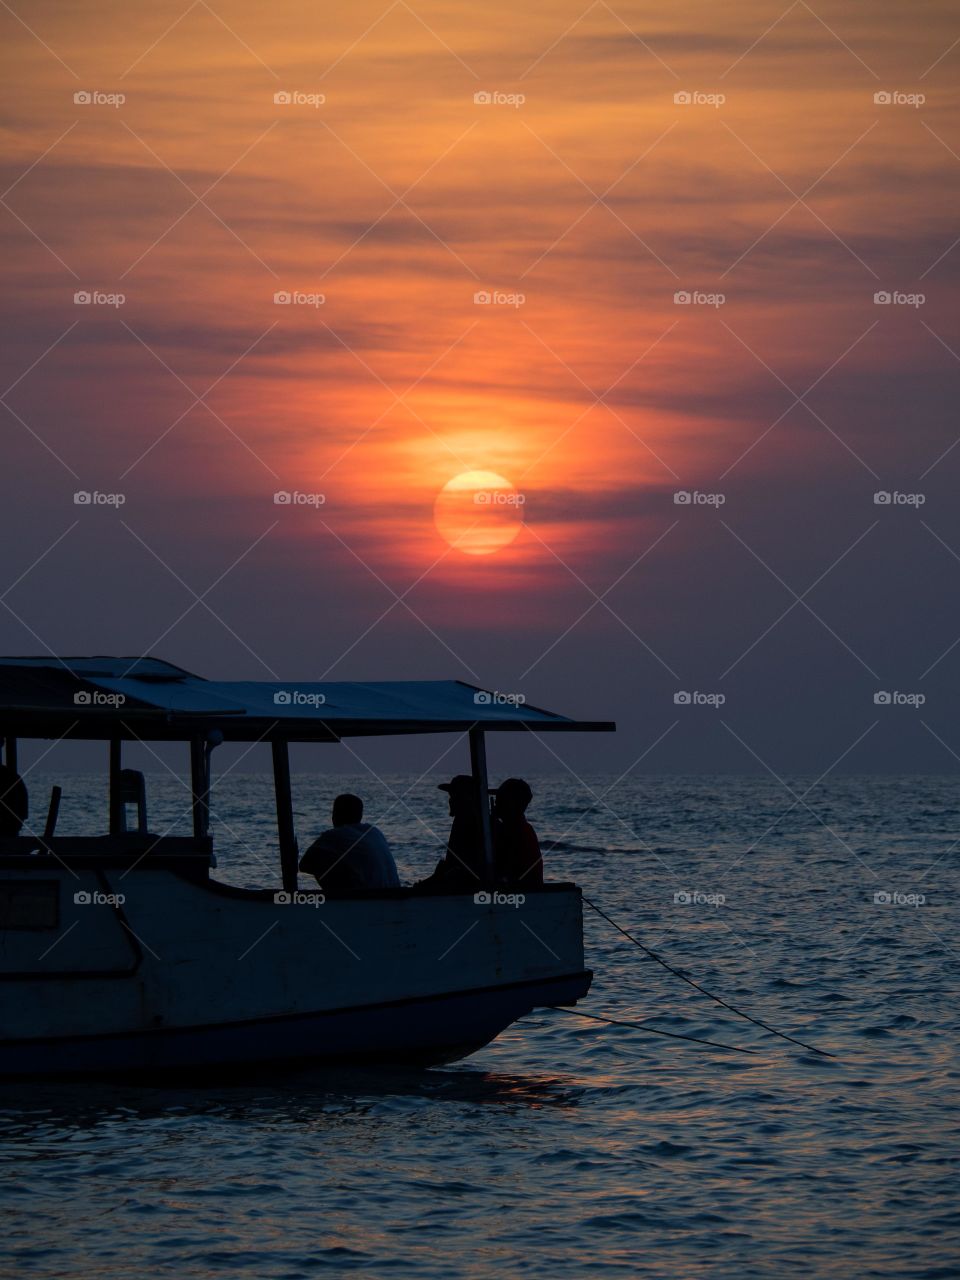 Boat at sunset 